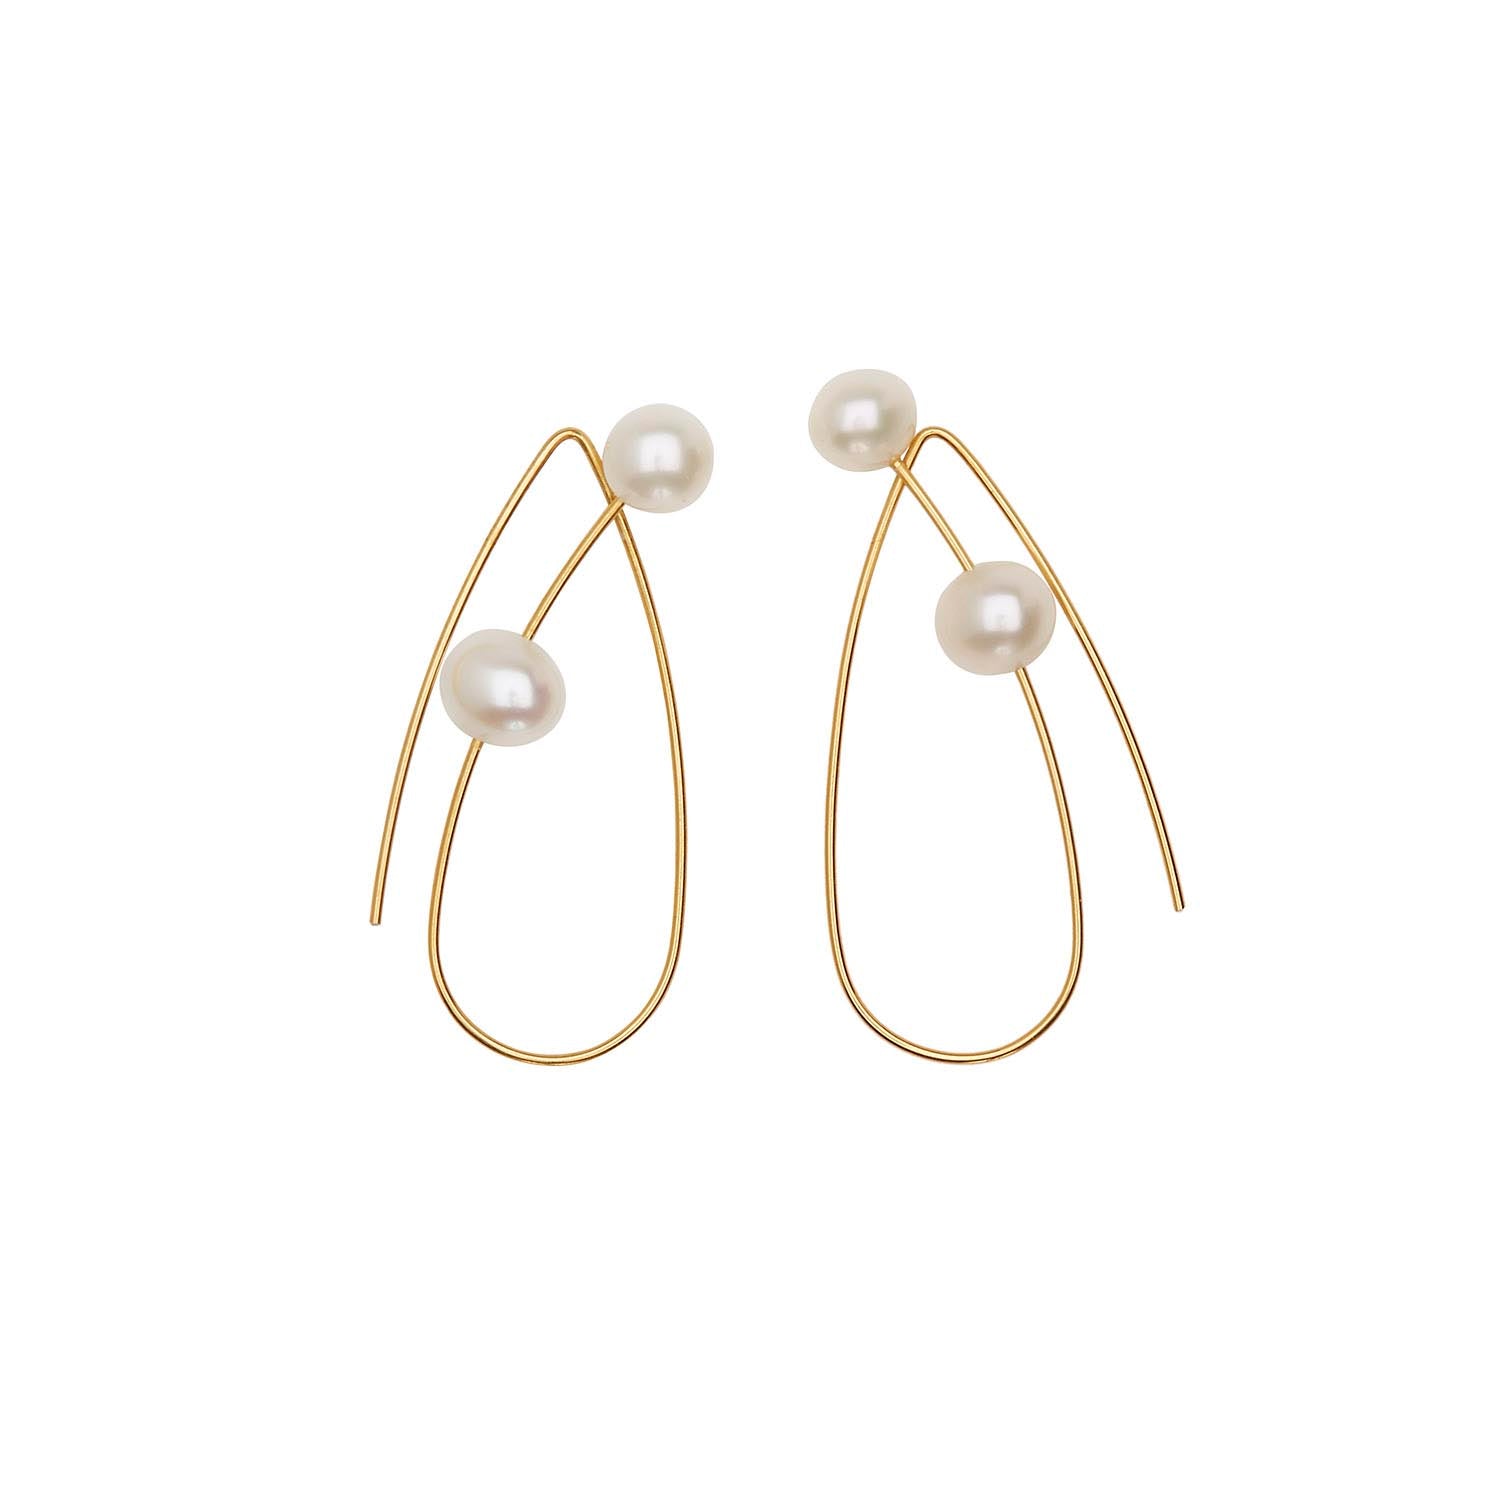 Pointed Loop Earrings with White Pearls